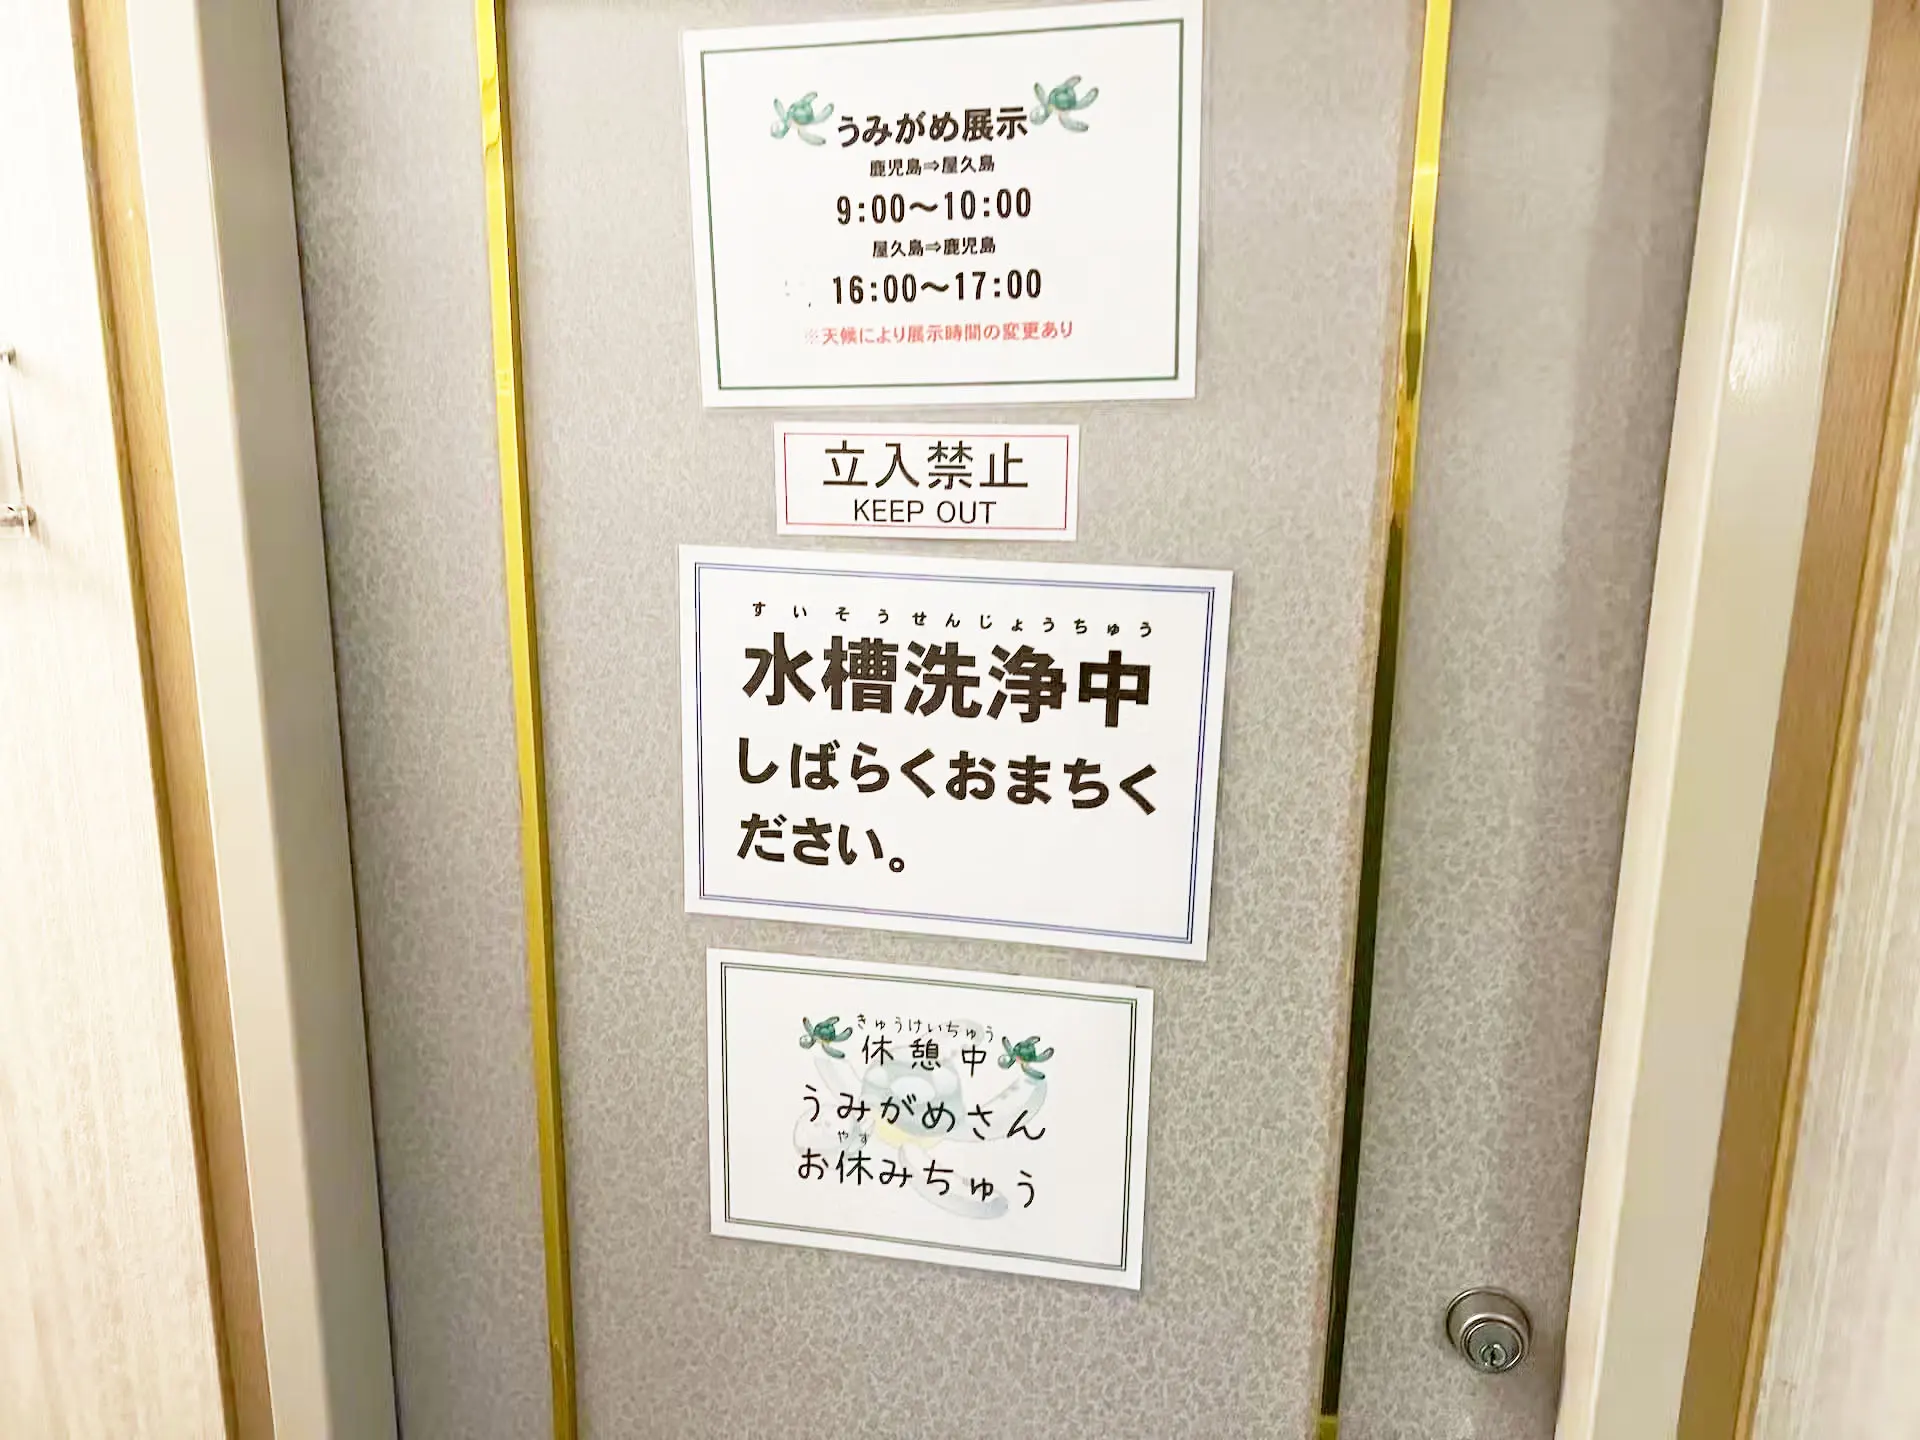 The door to the sea turtle room on board the Orita Kisen Ferry Yakushima 2